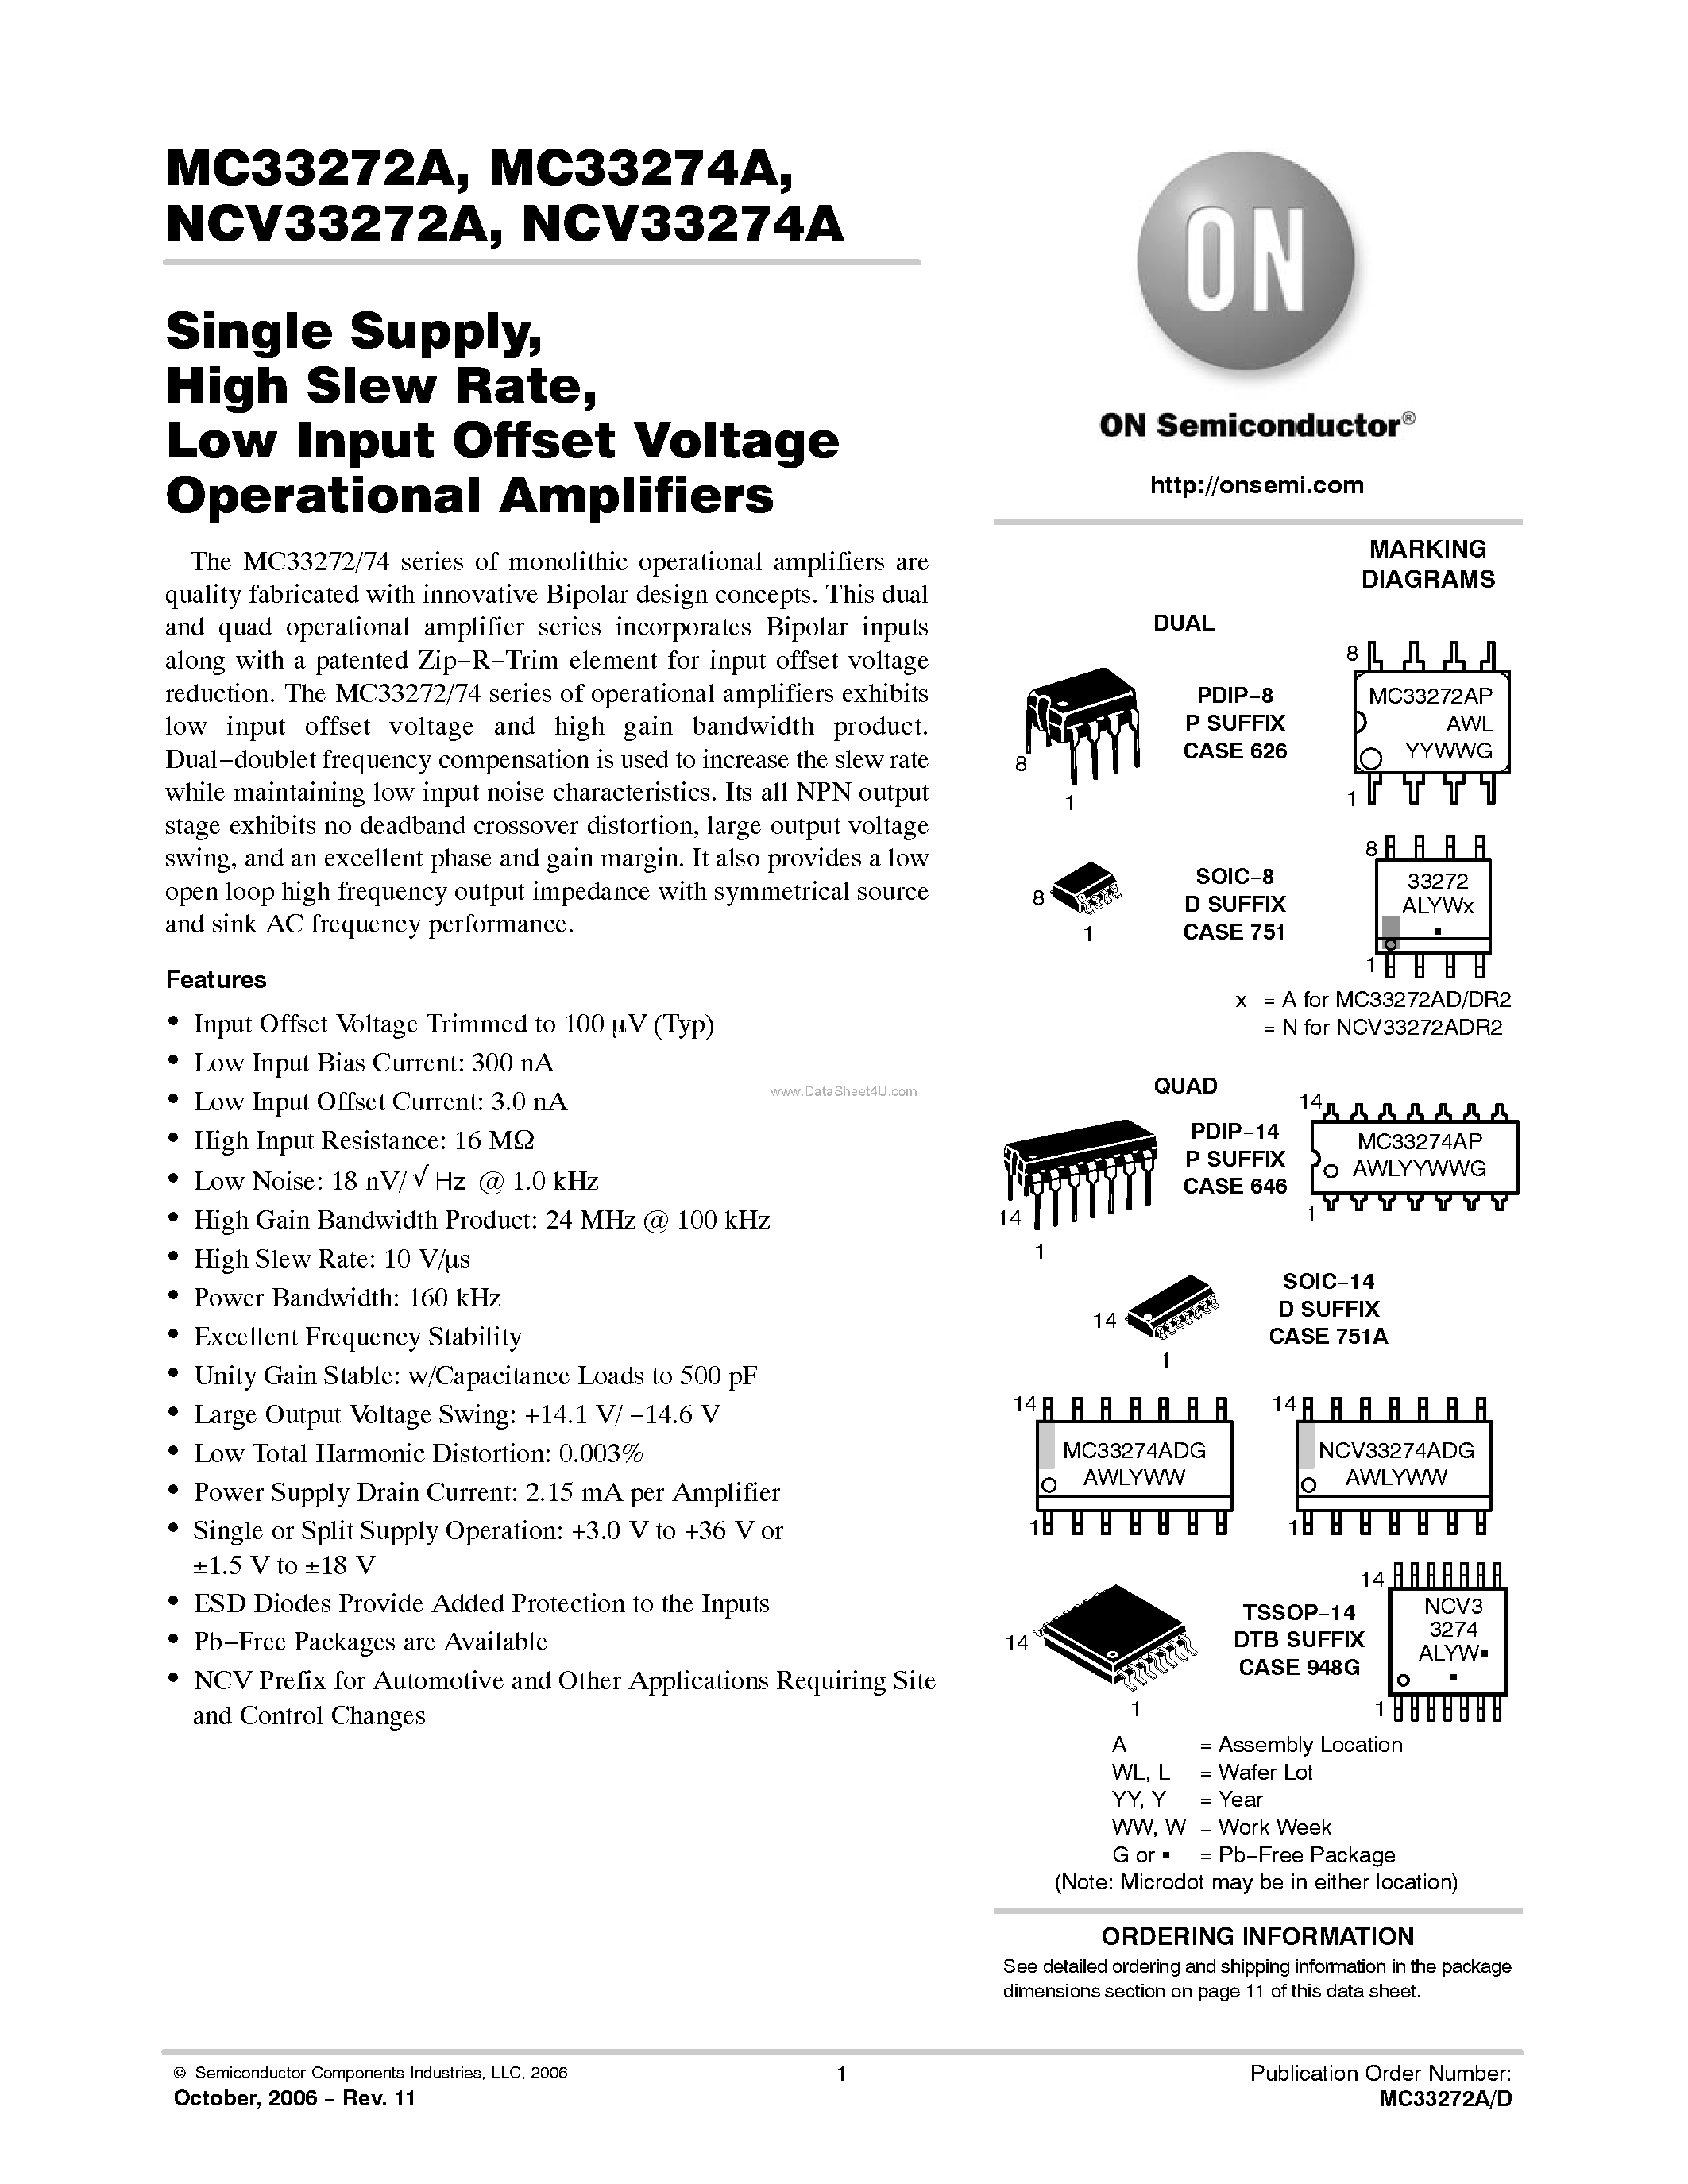 Datasheet MC33272A - (MC33272A / MC33274A) Low Input Offset Voltage Operational Amplifiers page 1